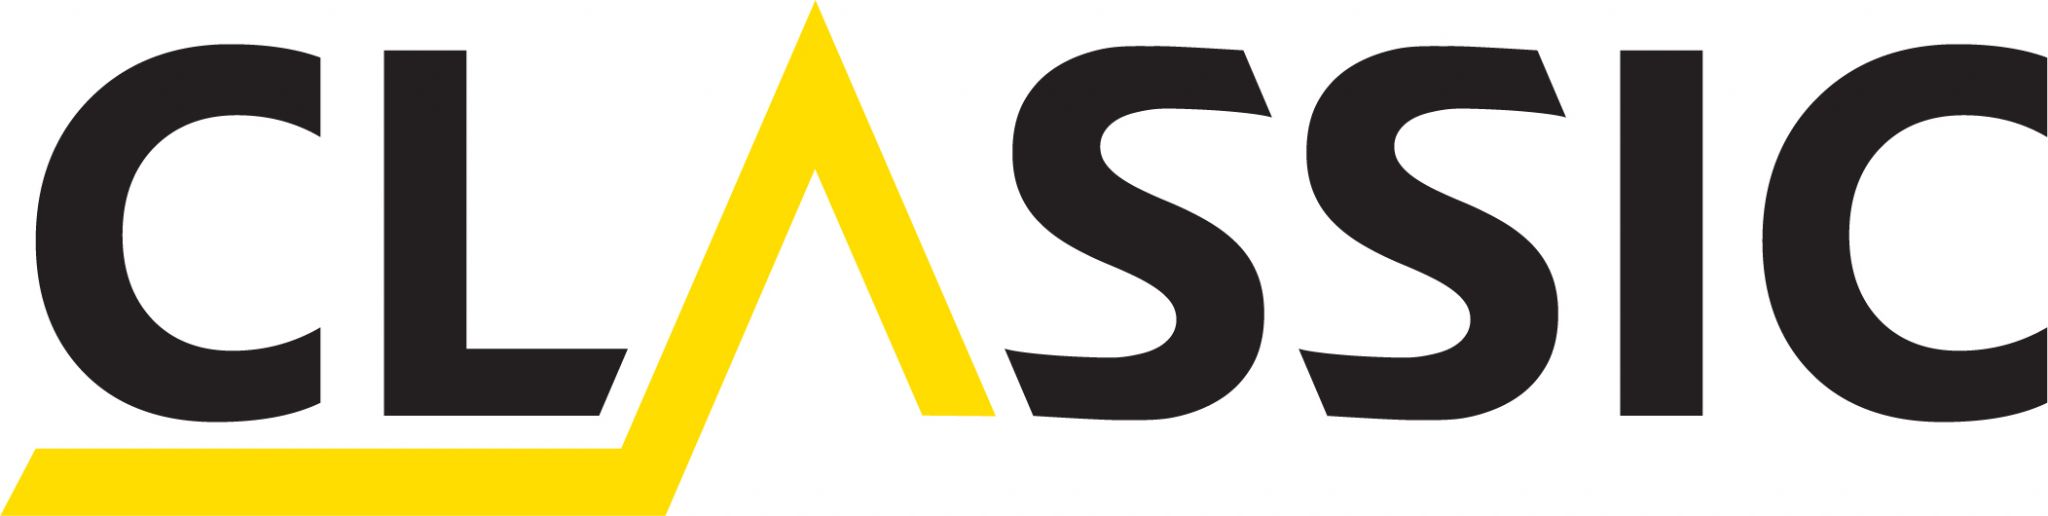 CLASSIC Logo Schwarz Gelb   Jpg